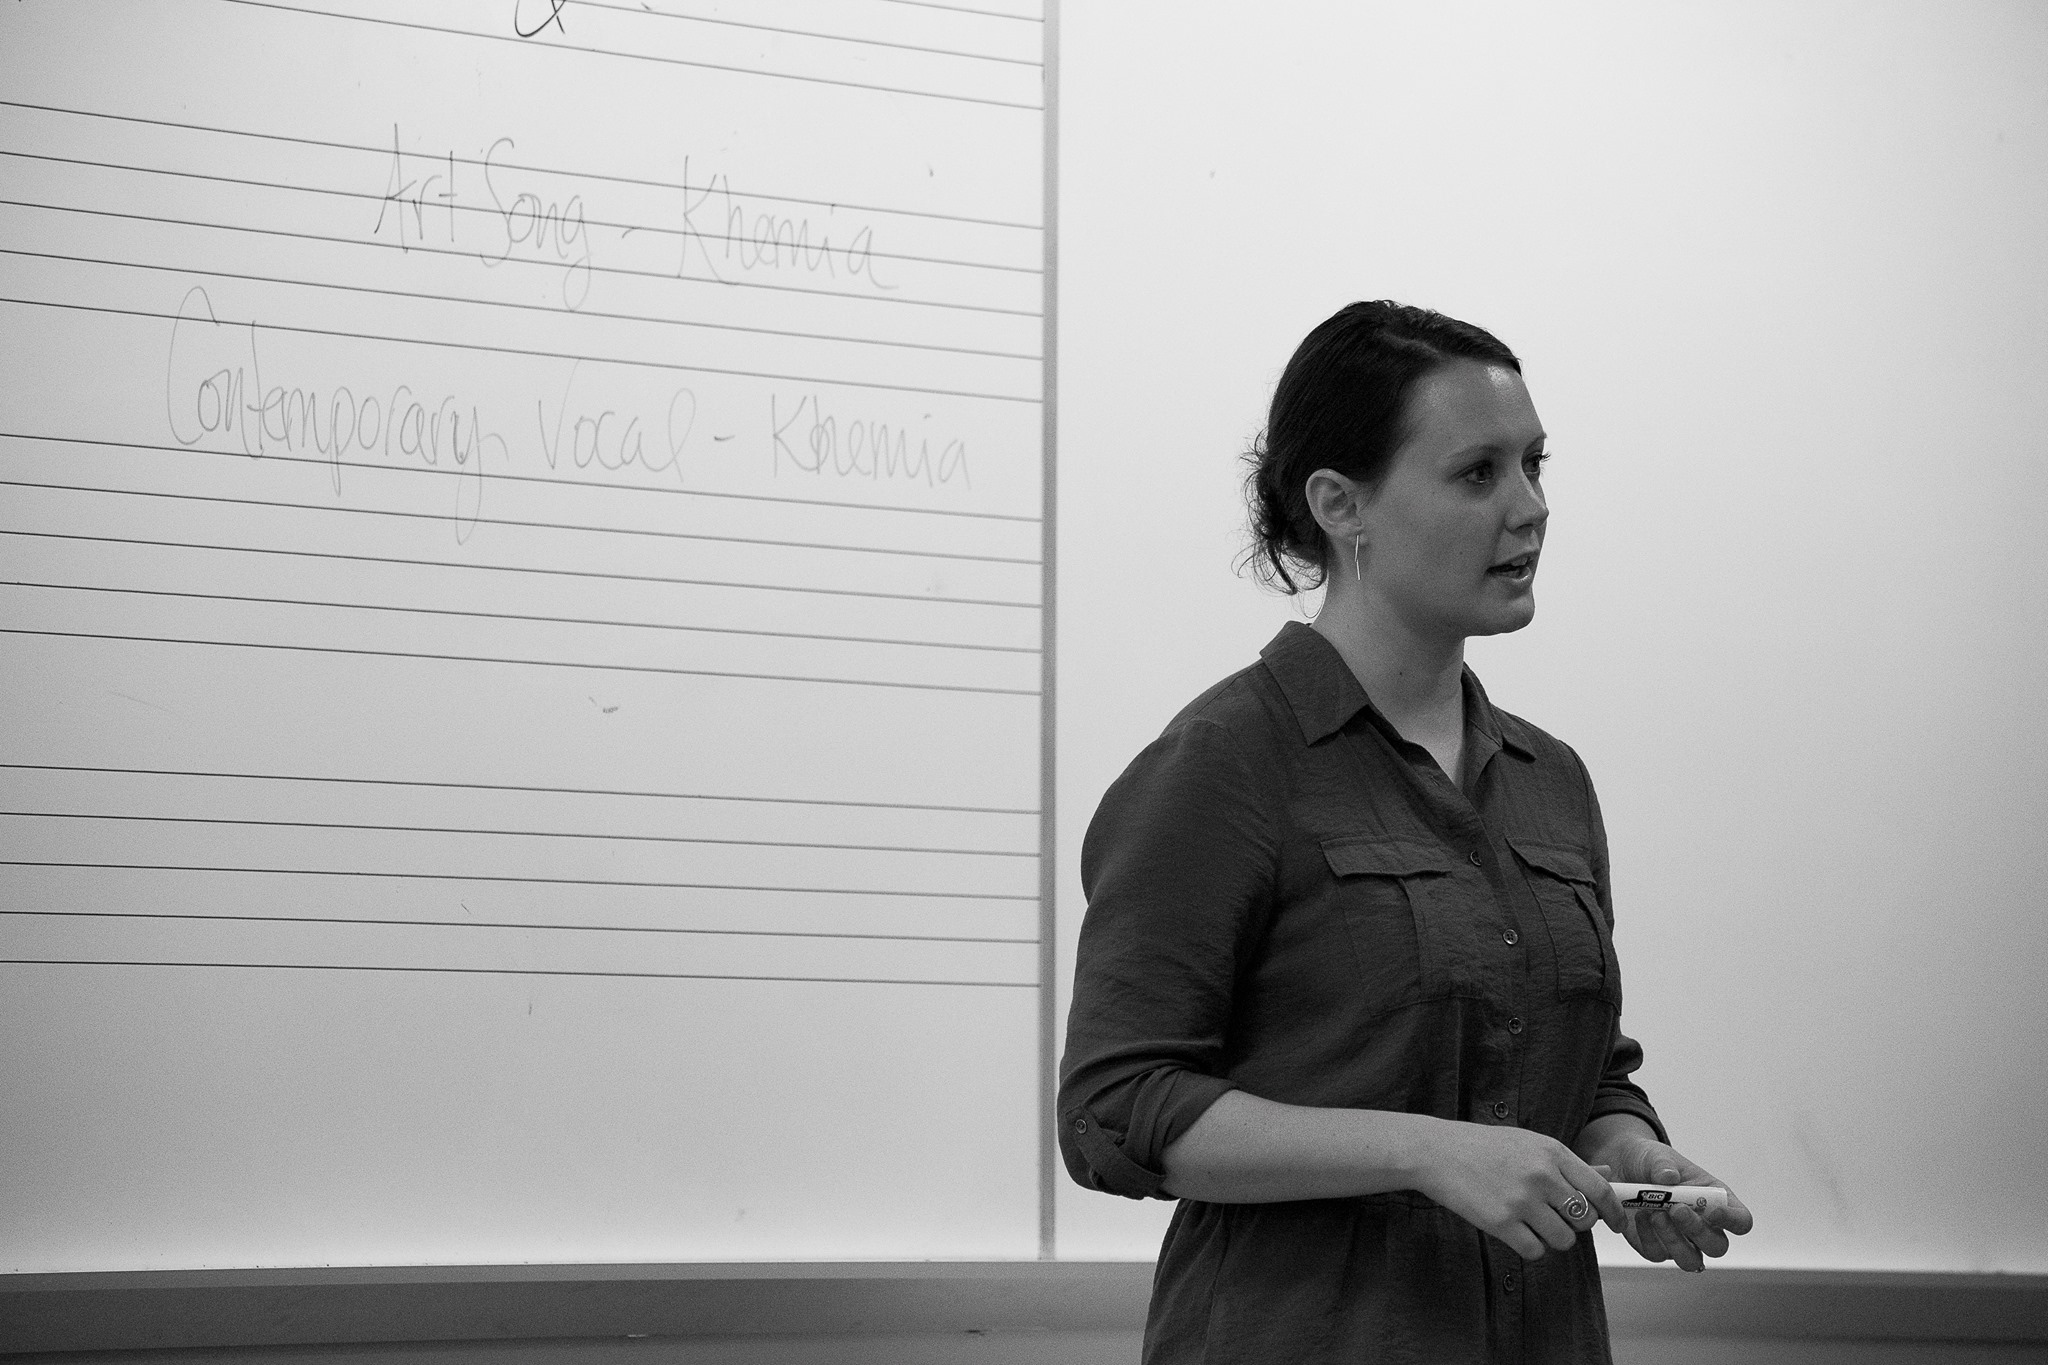 Tufts University Composer Workshop, August 2016